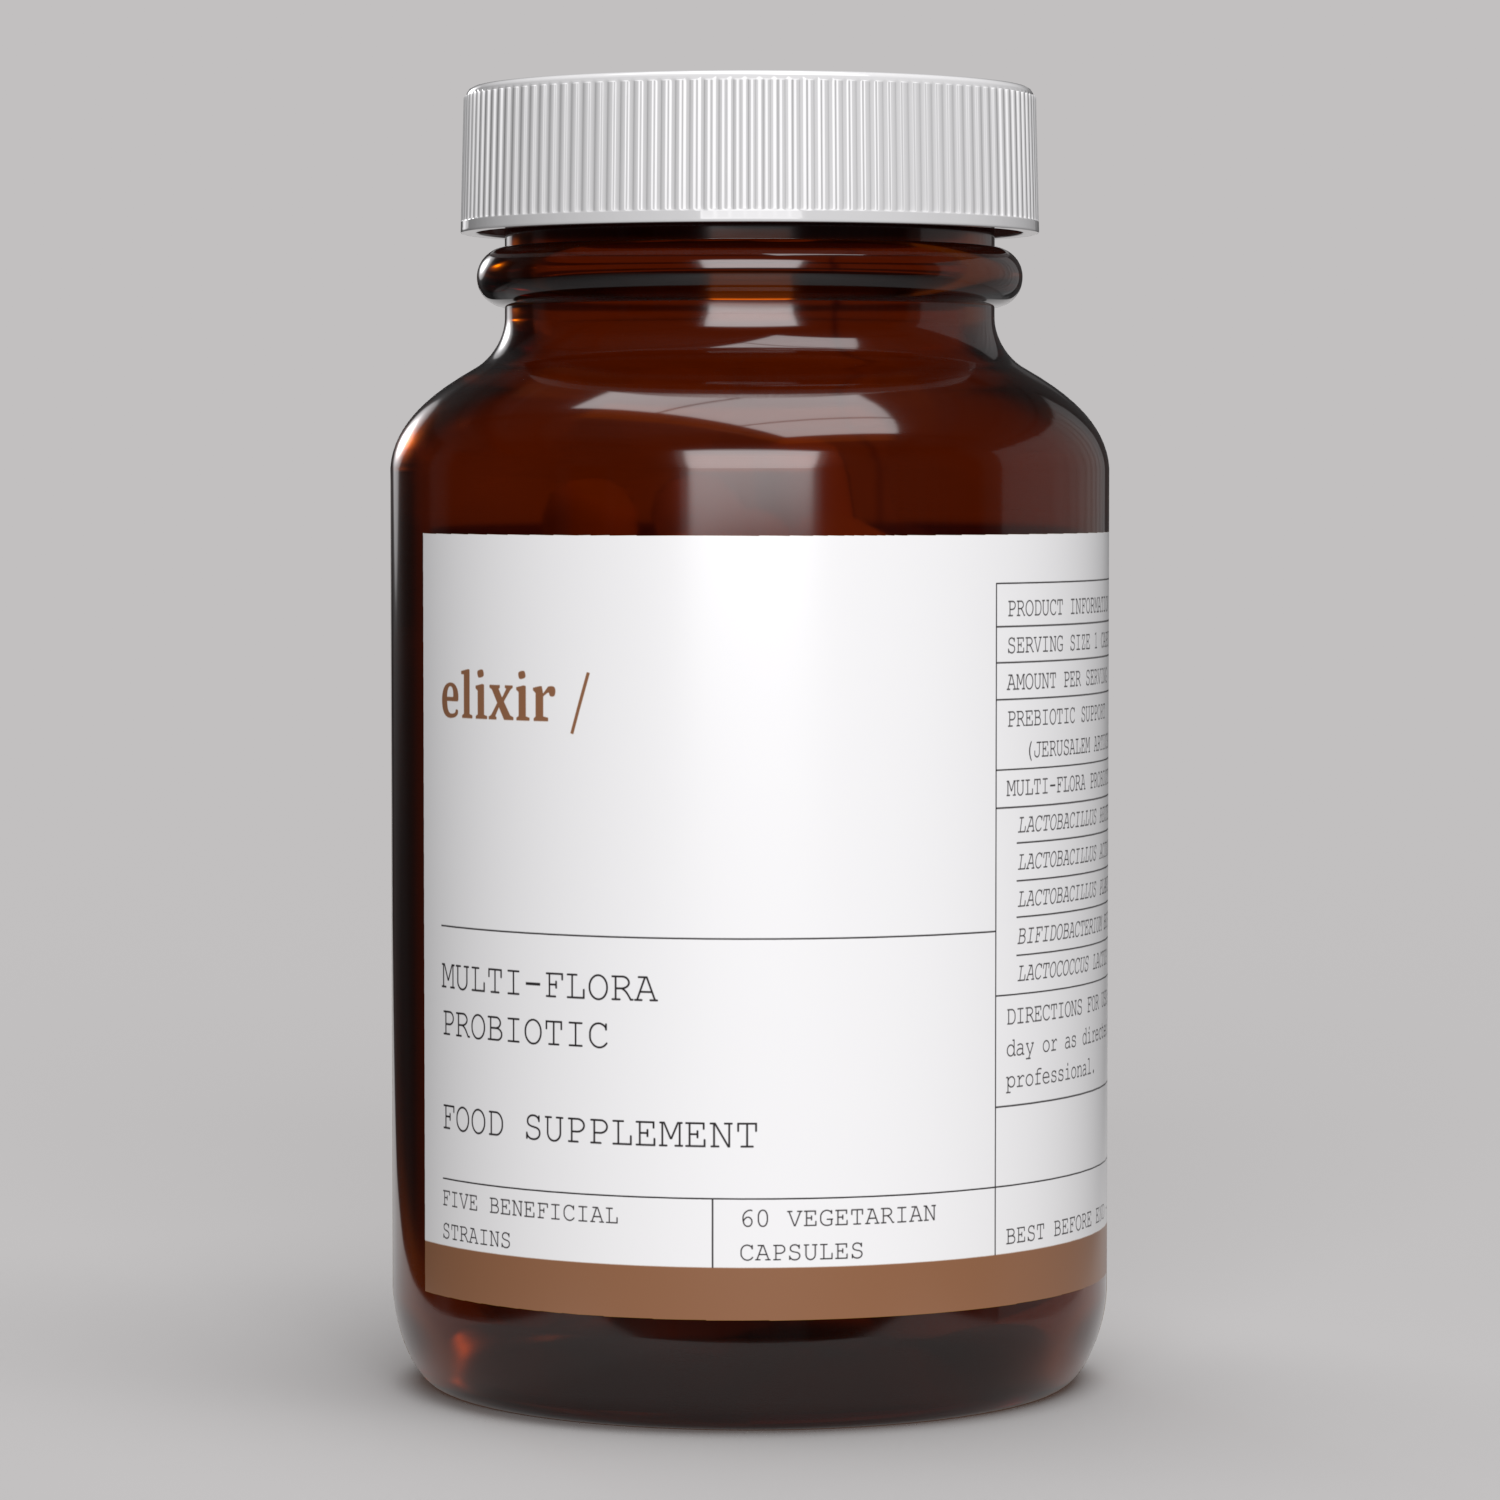 elixir/ Multi-Flora Probiotic 60 Veg Caps